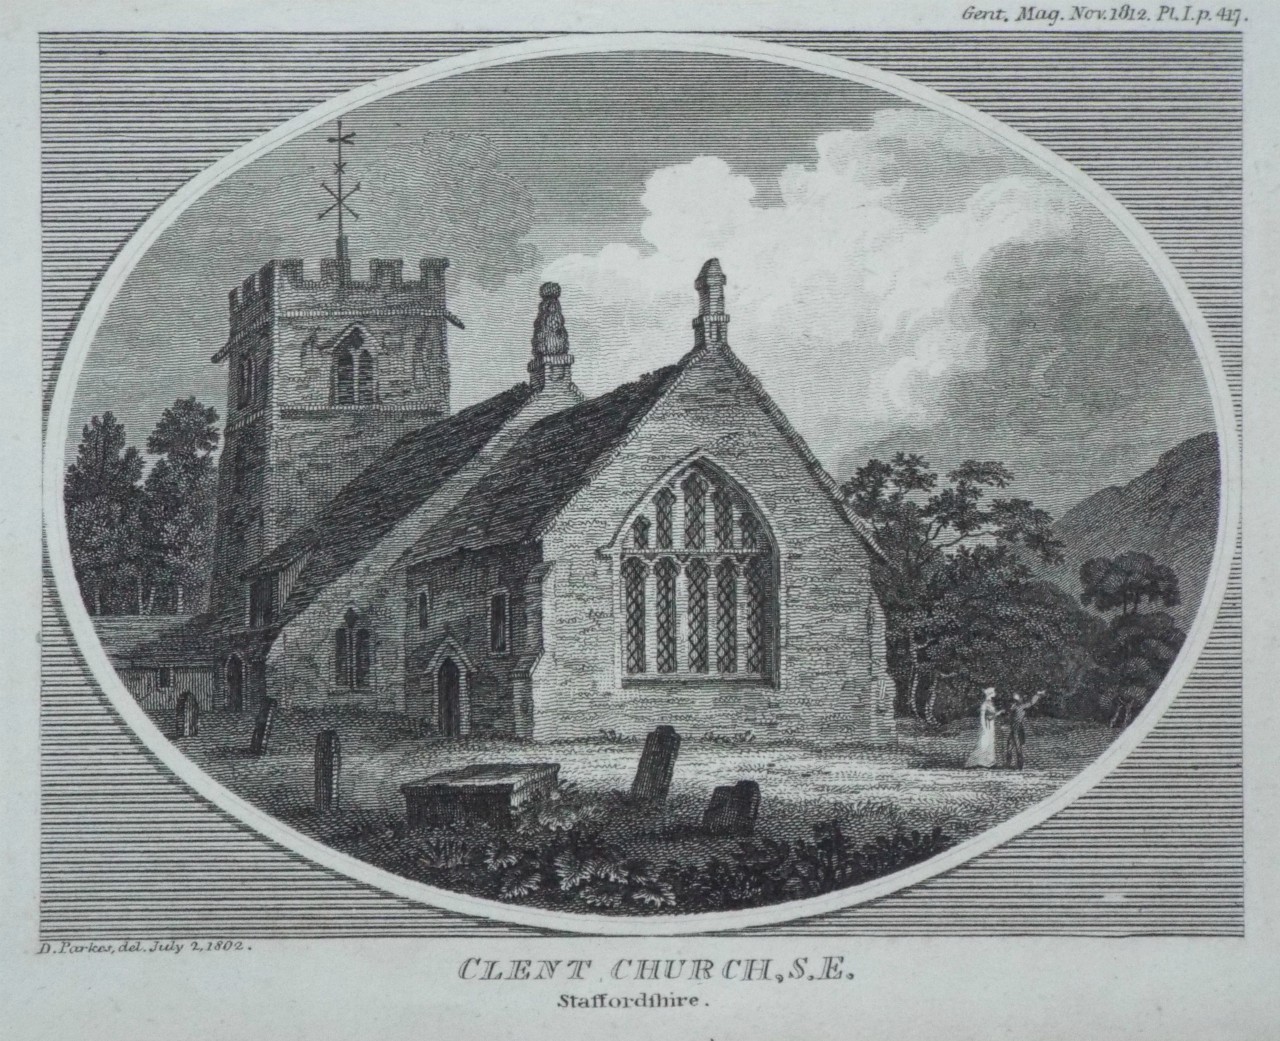 Print - Clent Church, S.E. Staffordshire.